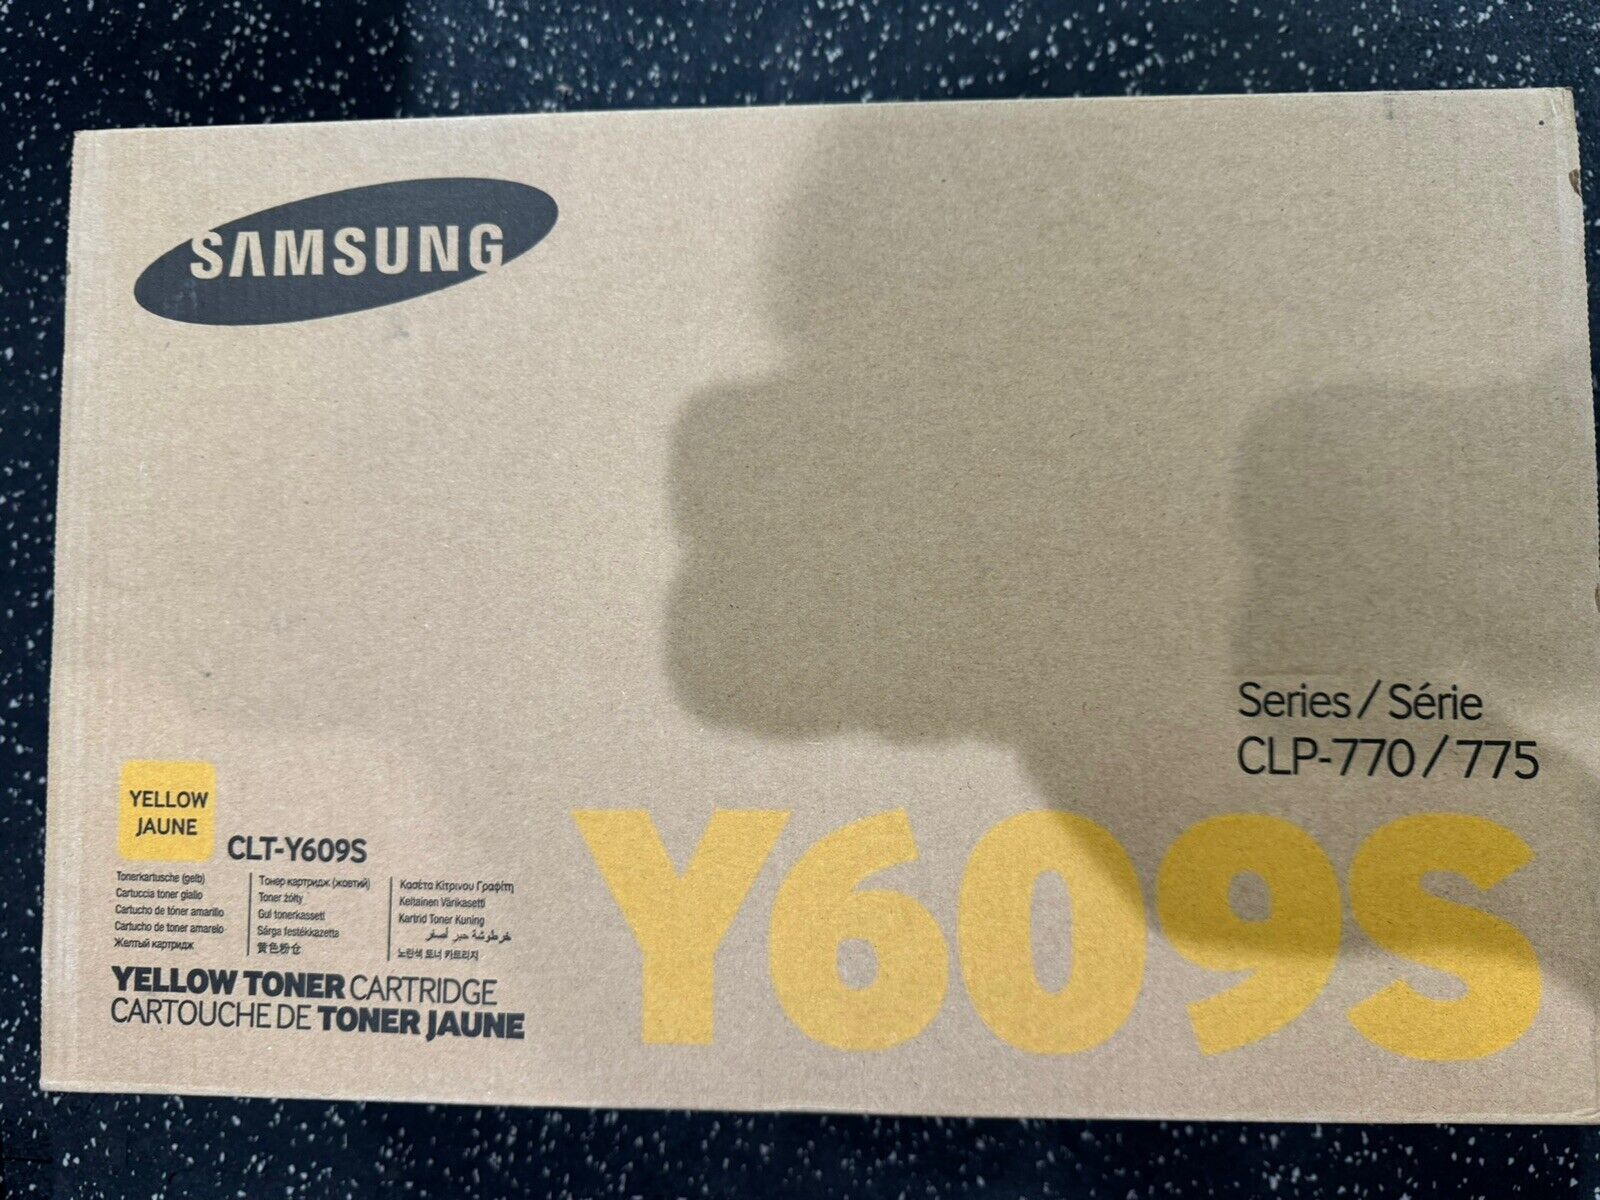 NEW Genuine Samsung Y609S Yellow Printer Toner Cartridge CLT-Y609S - CLP-770